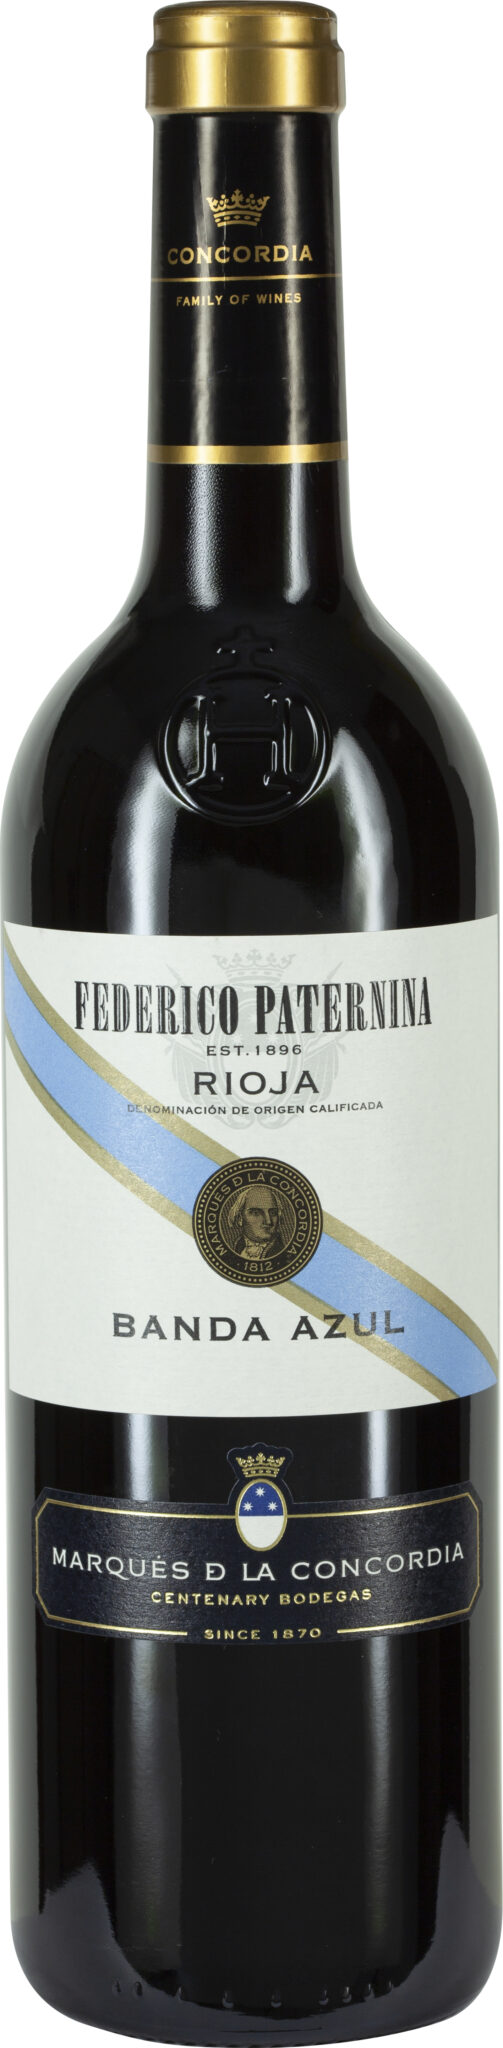 Rioja DOCa Federico Paternina der-schmeckt-mir Azul Banda bei